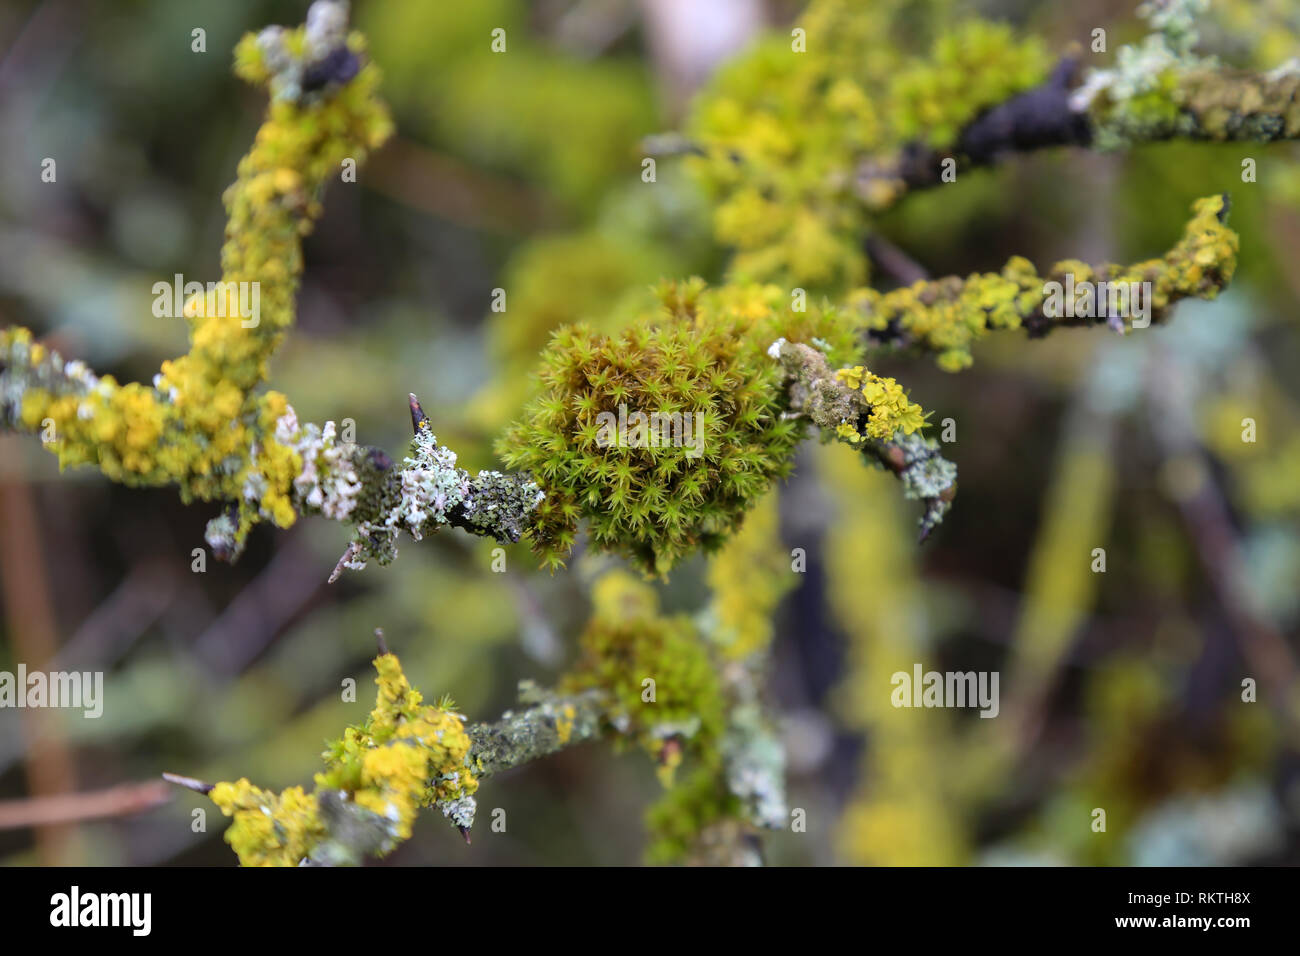 Lichen / Lichen growing on the tree. Stock Photo